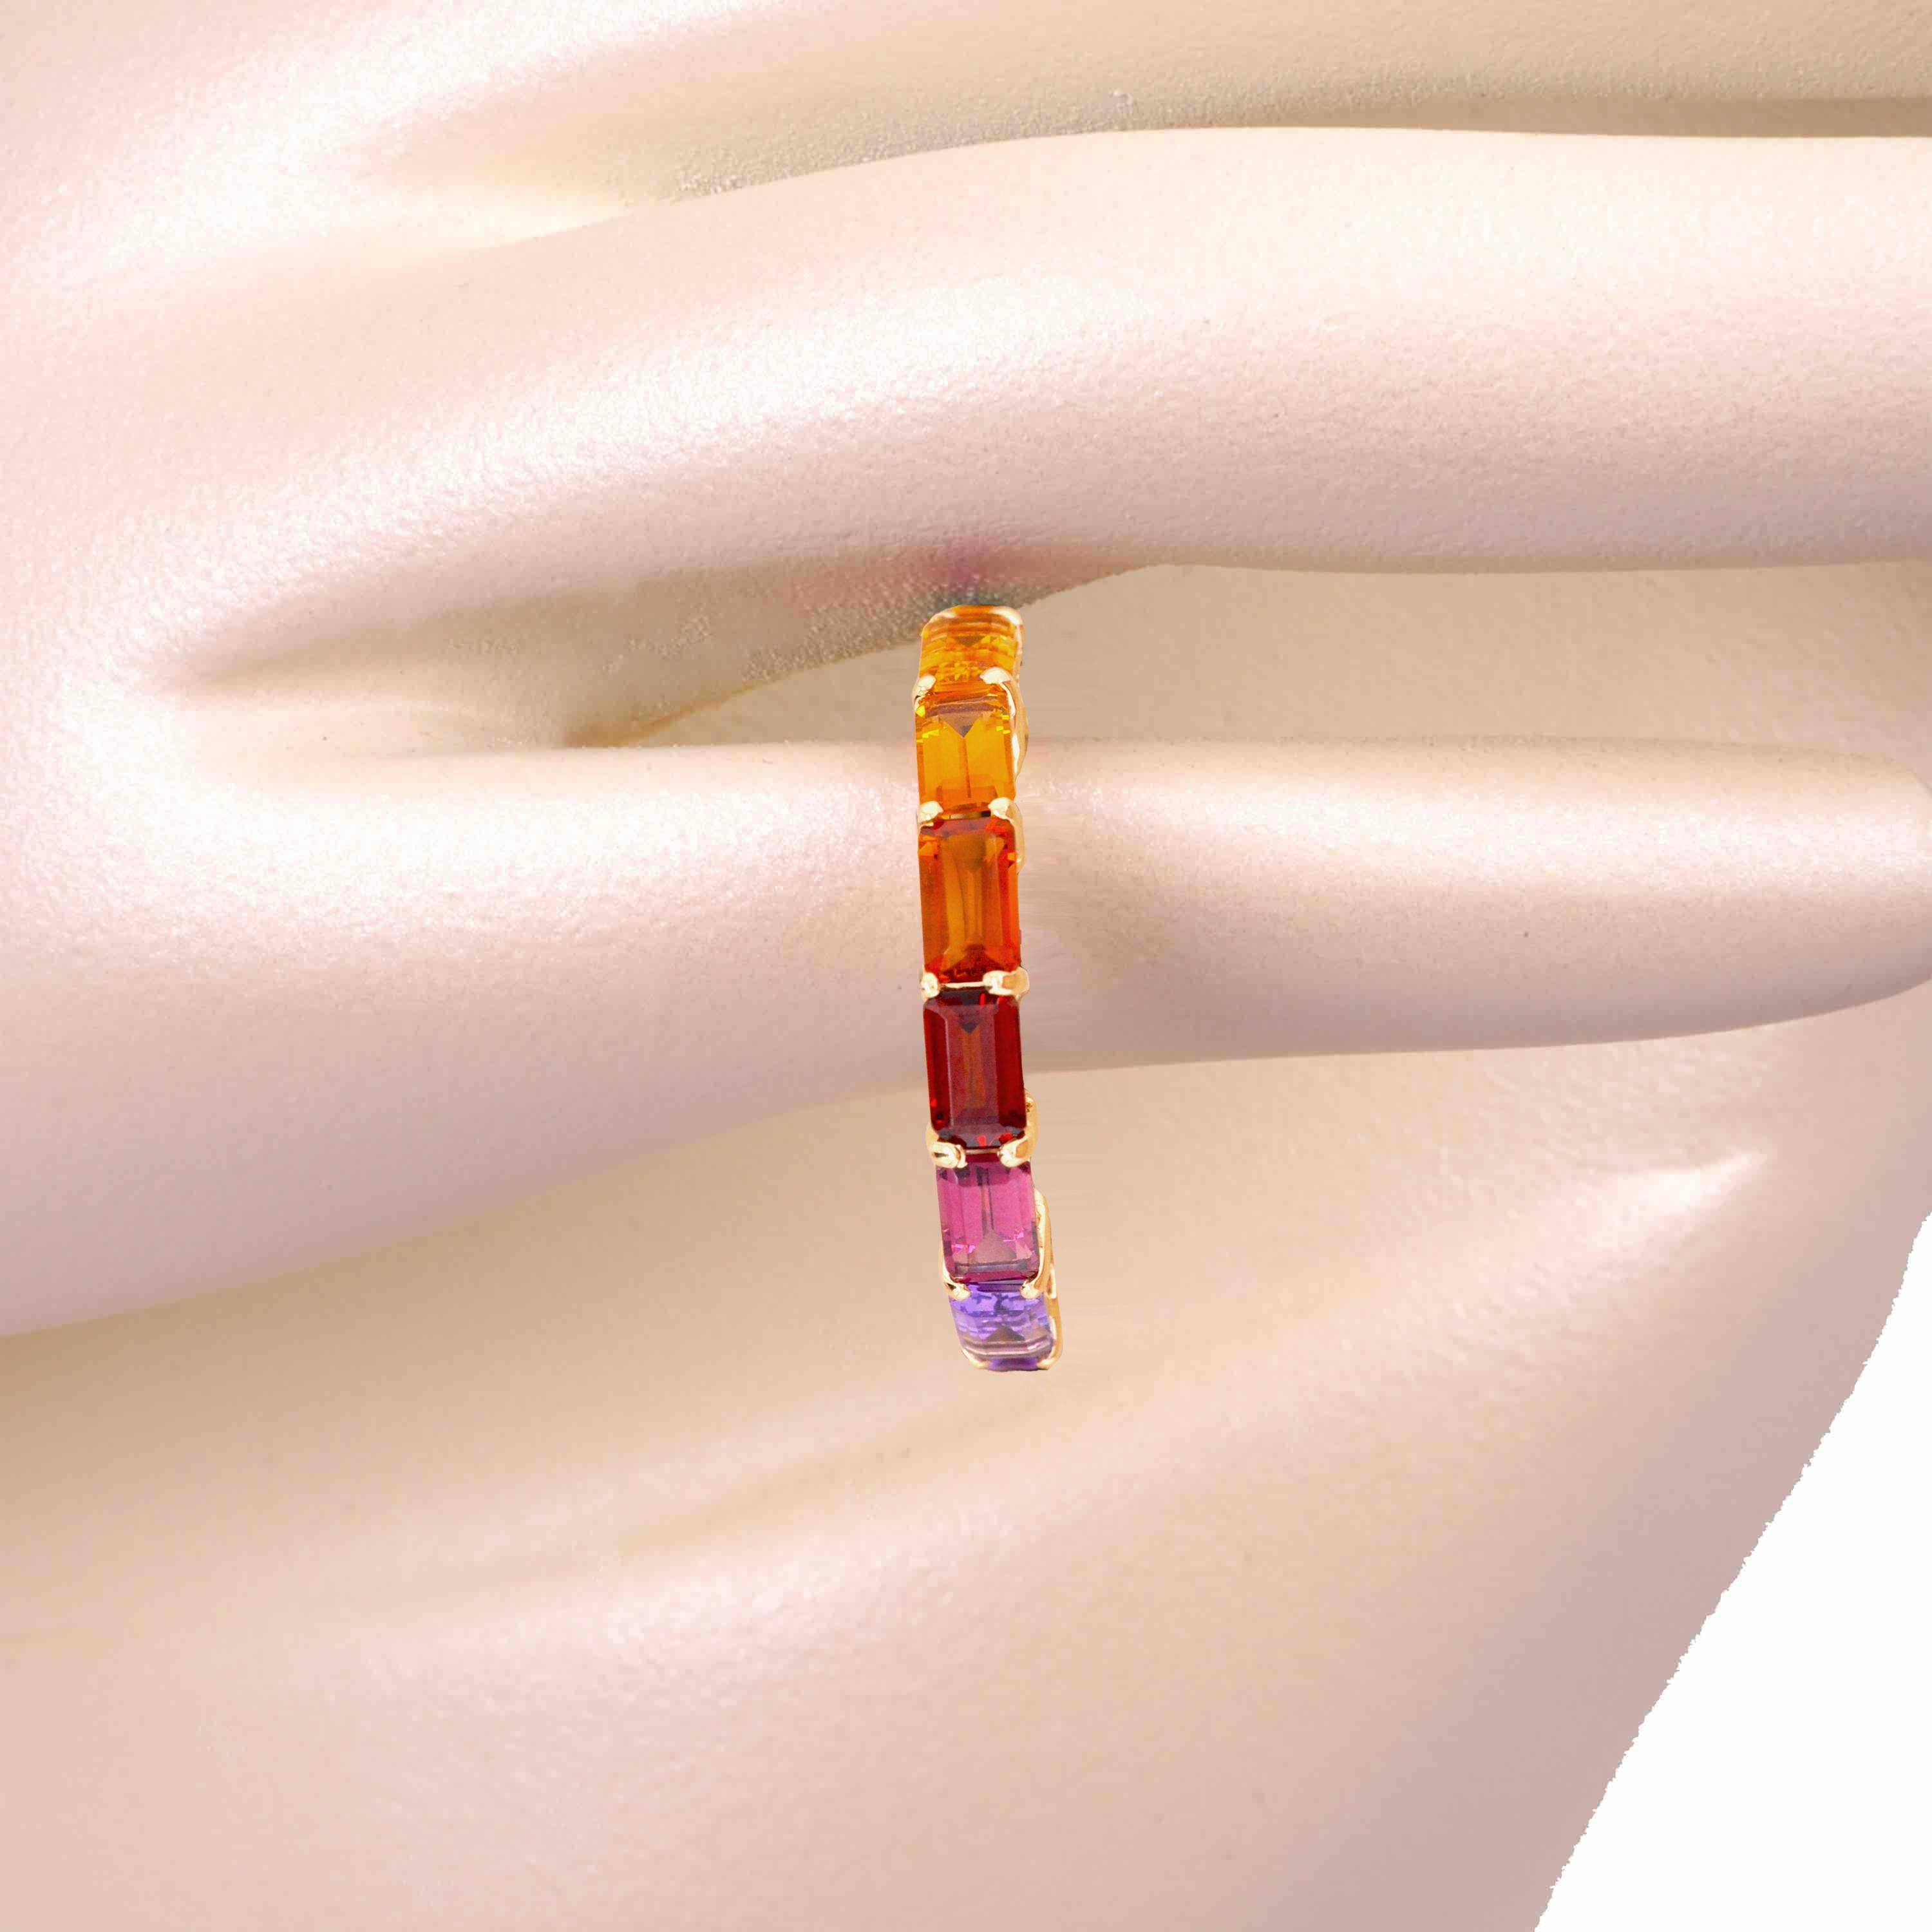 En vente :  Anneau d'éternité en or 18 carats serti de pierres précieuses octogonales multicolores arc-en-ciel 3